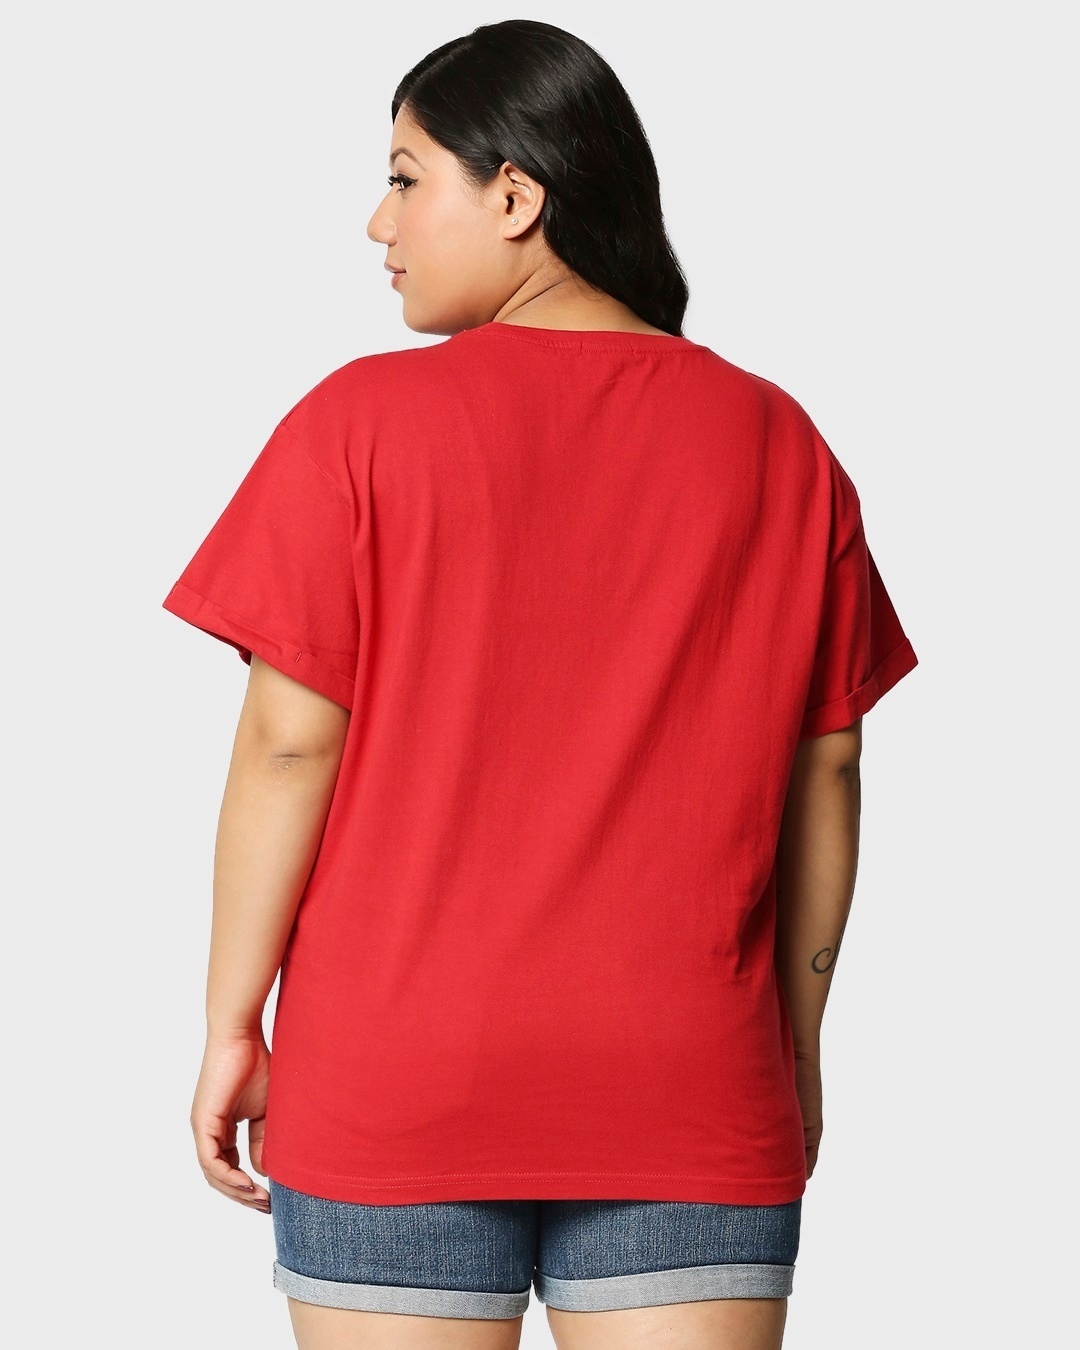 Shop Women's White & Red Plus Size Boyfriend T-shirt (Pack of 2)